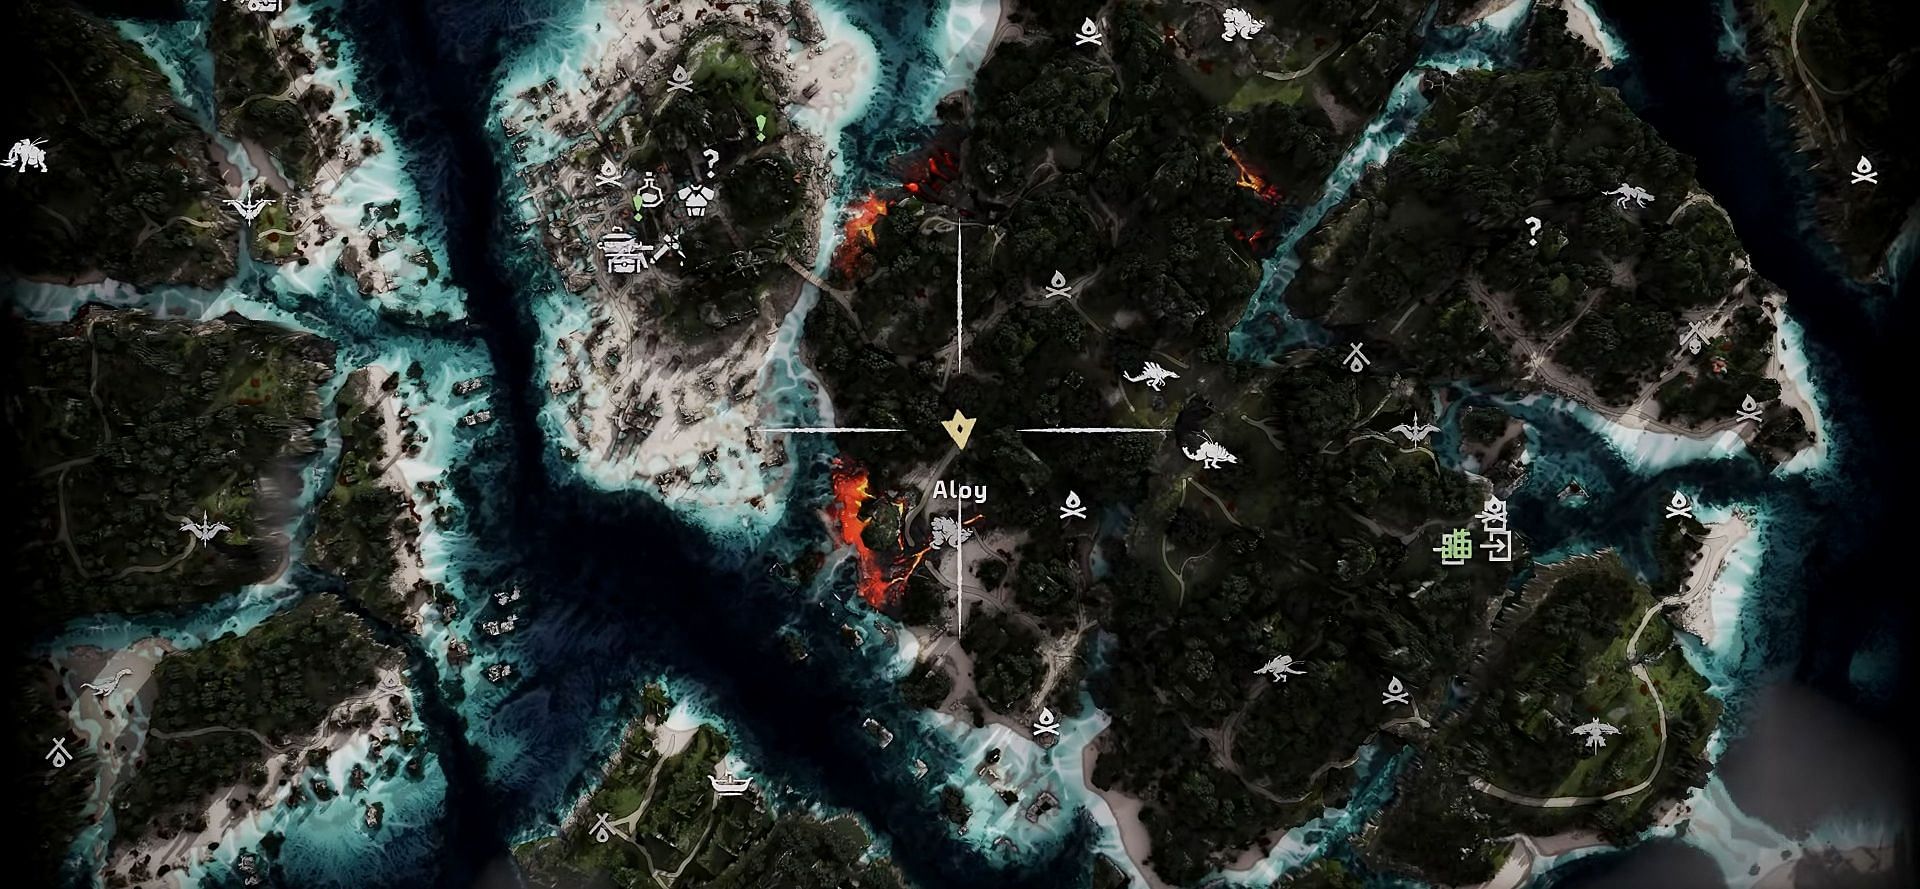 Stingspawn location in map (Image via Guerrilla Games)